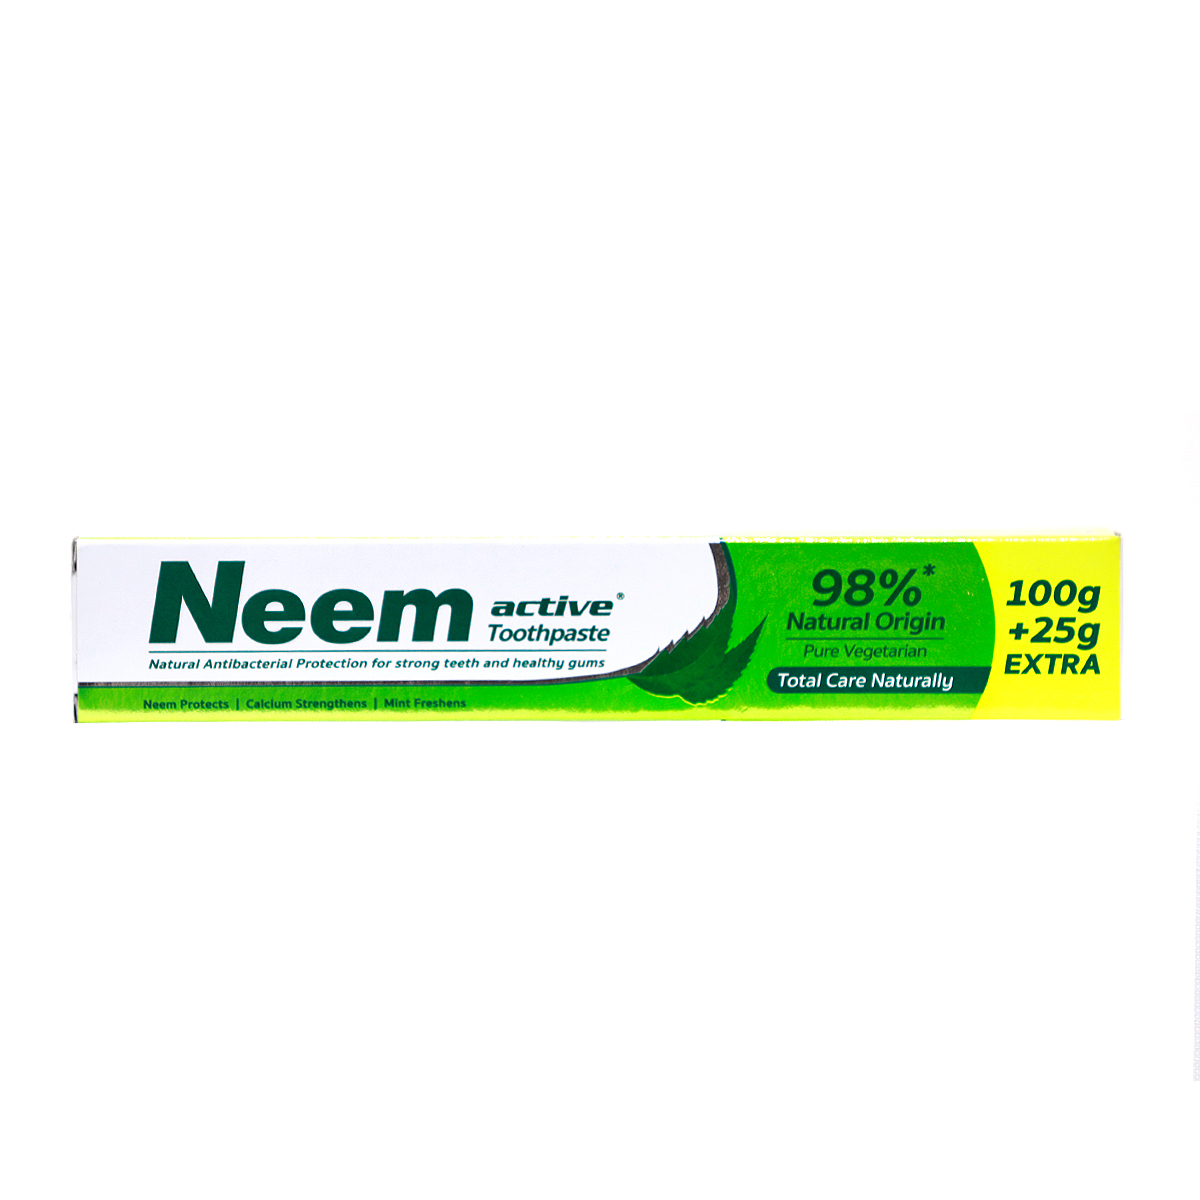 Neem Active Toothpaste 100g